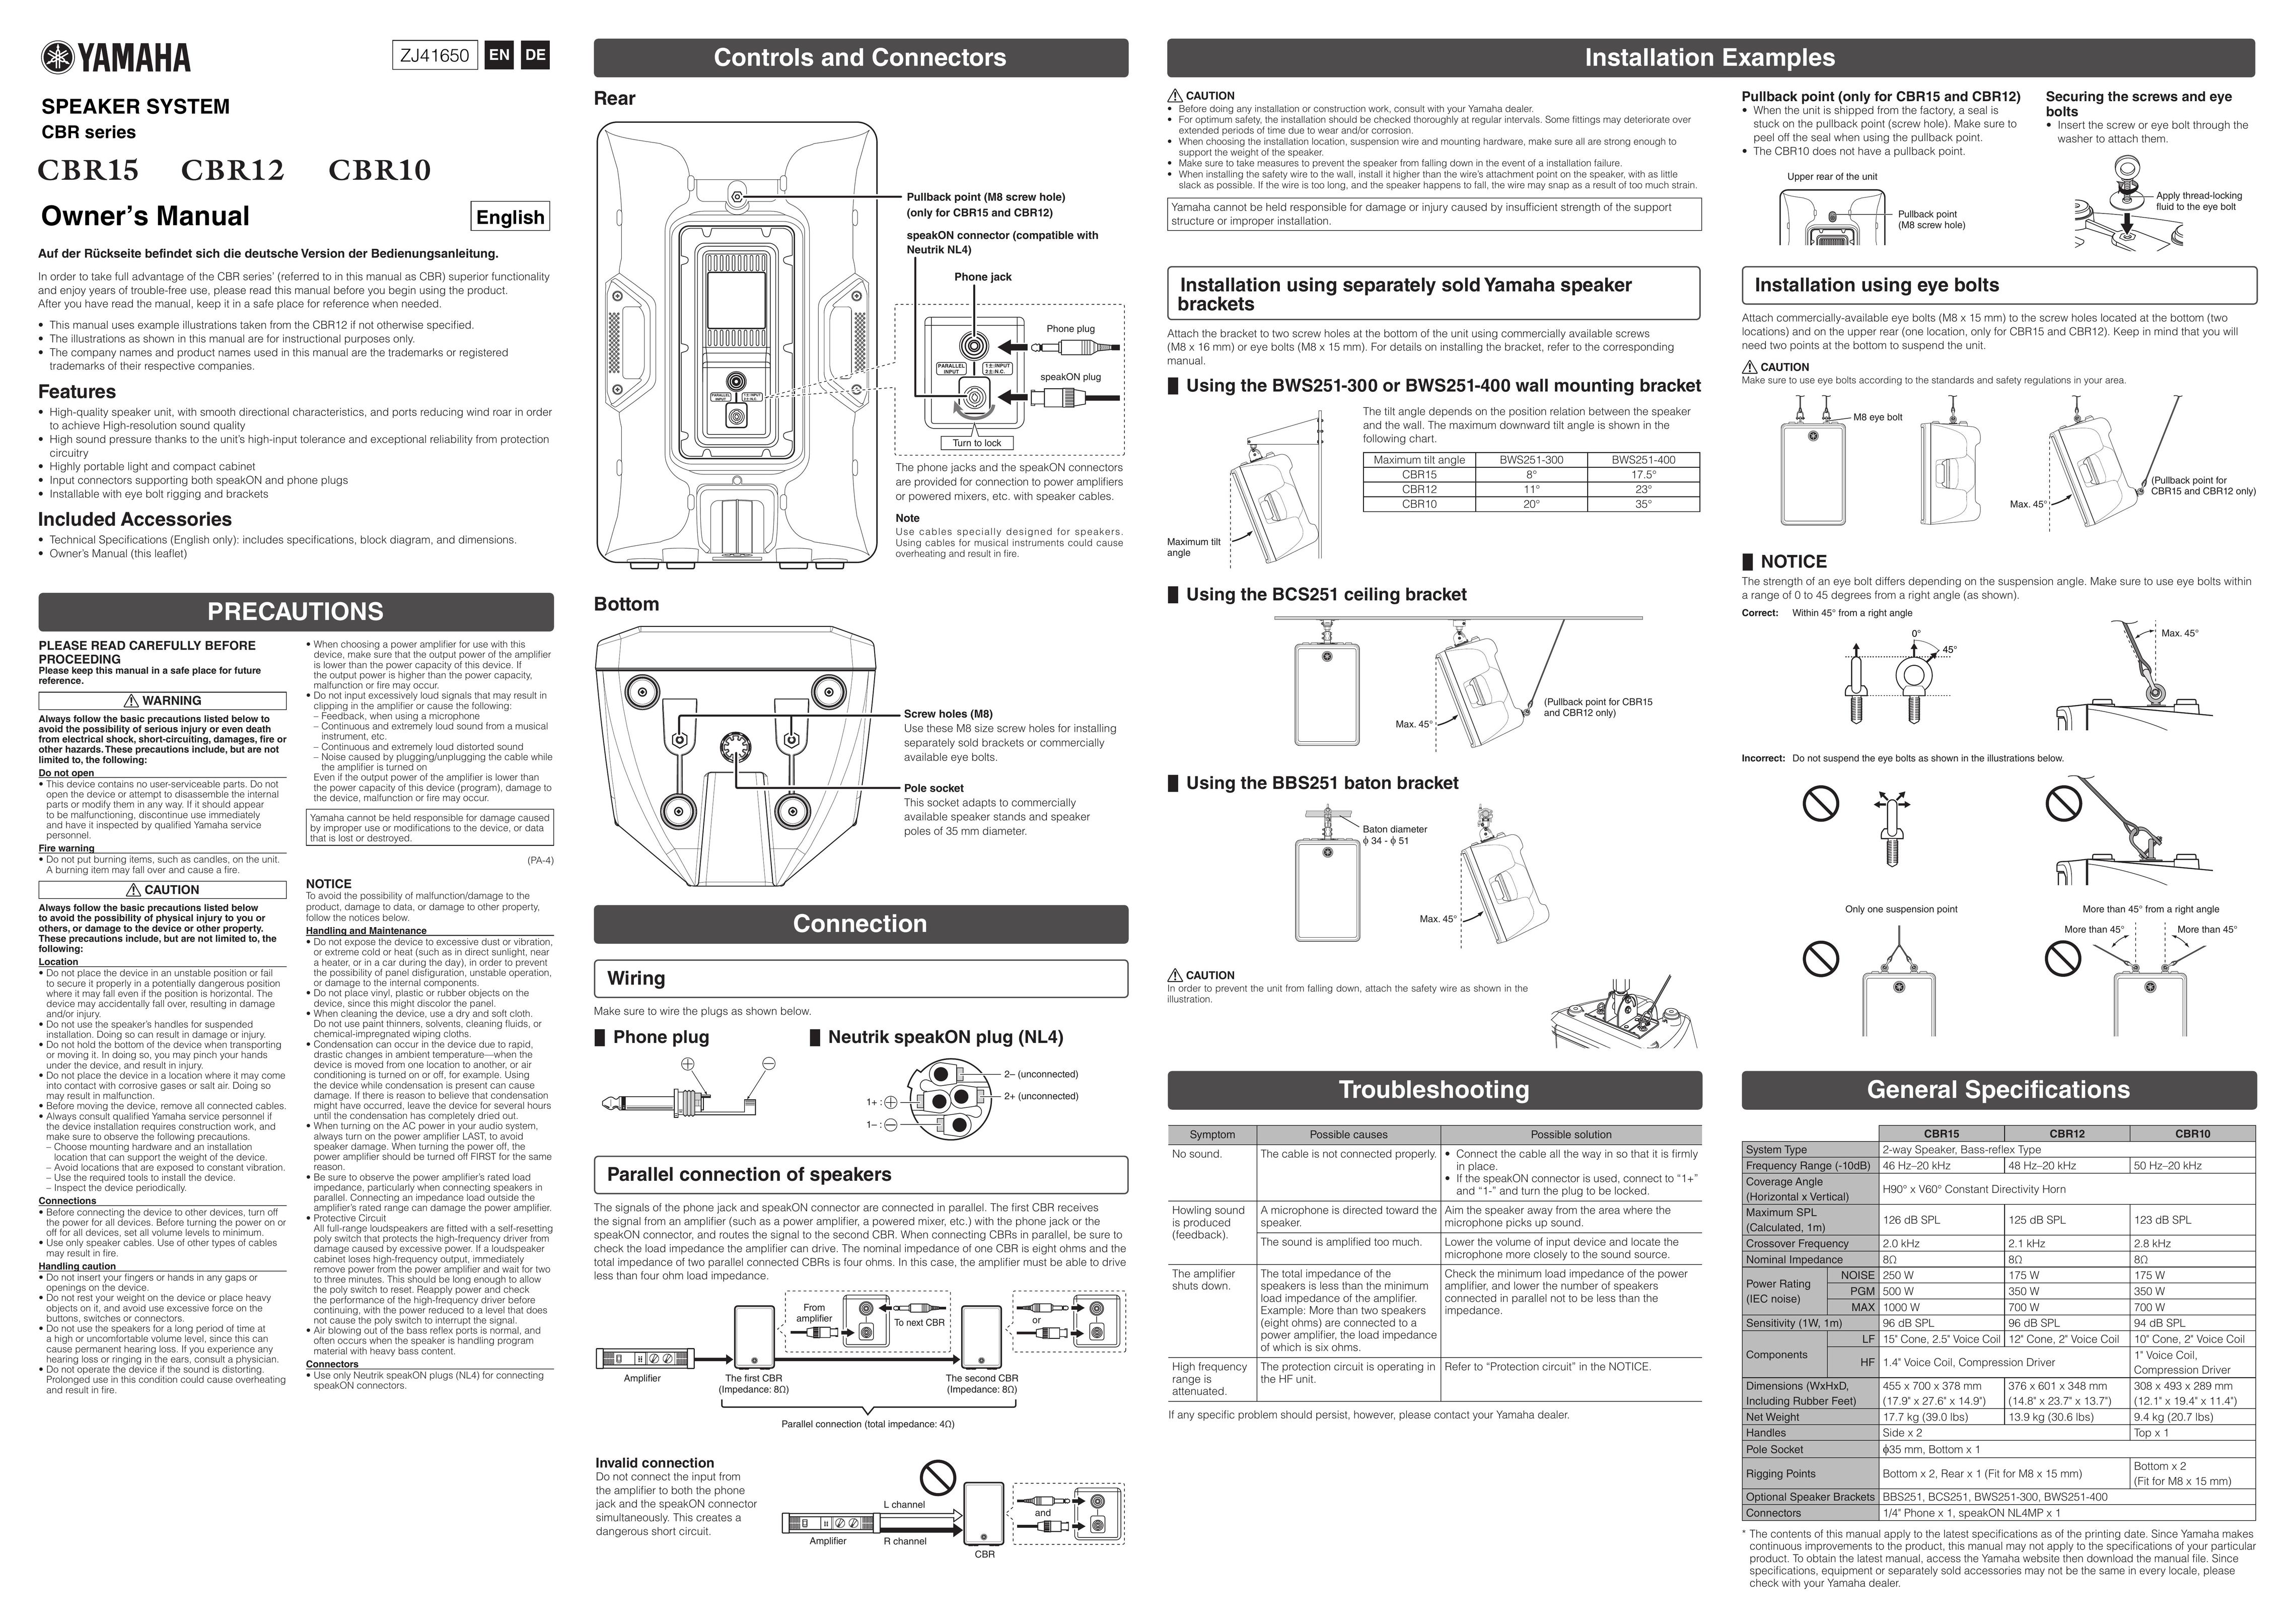 Yamaha CBR12 Portable Speaker User Manual